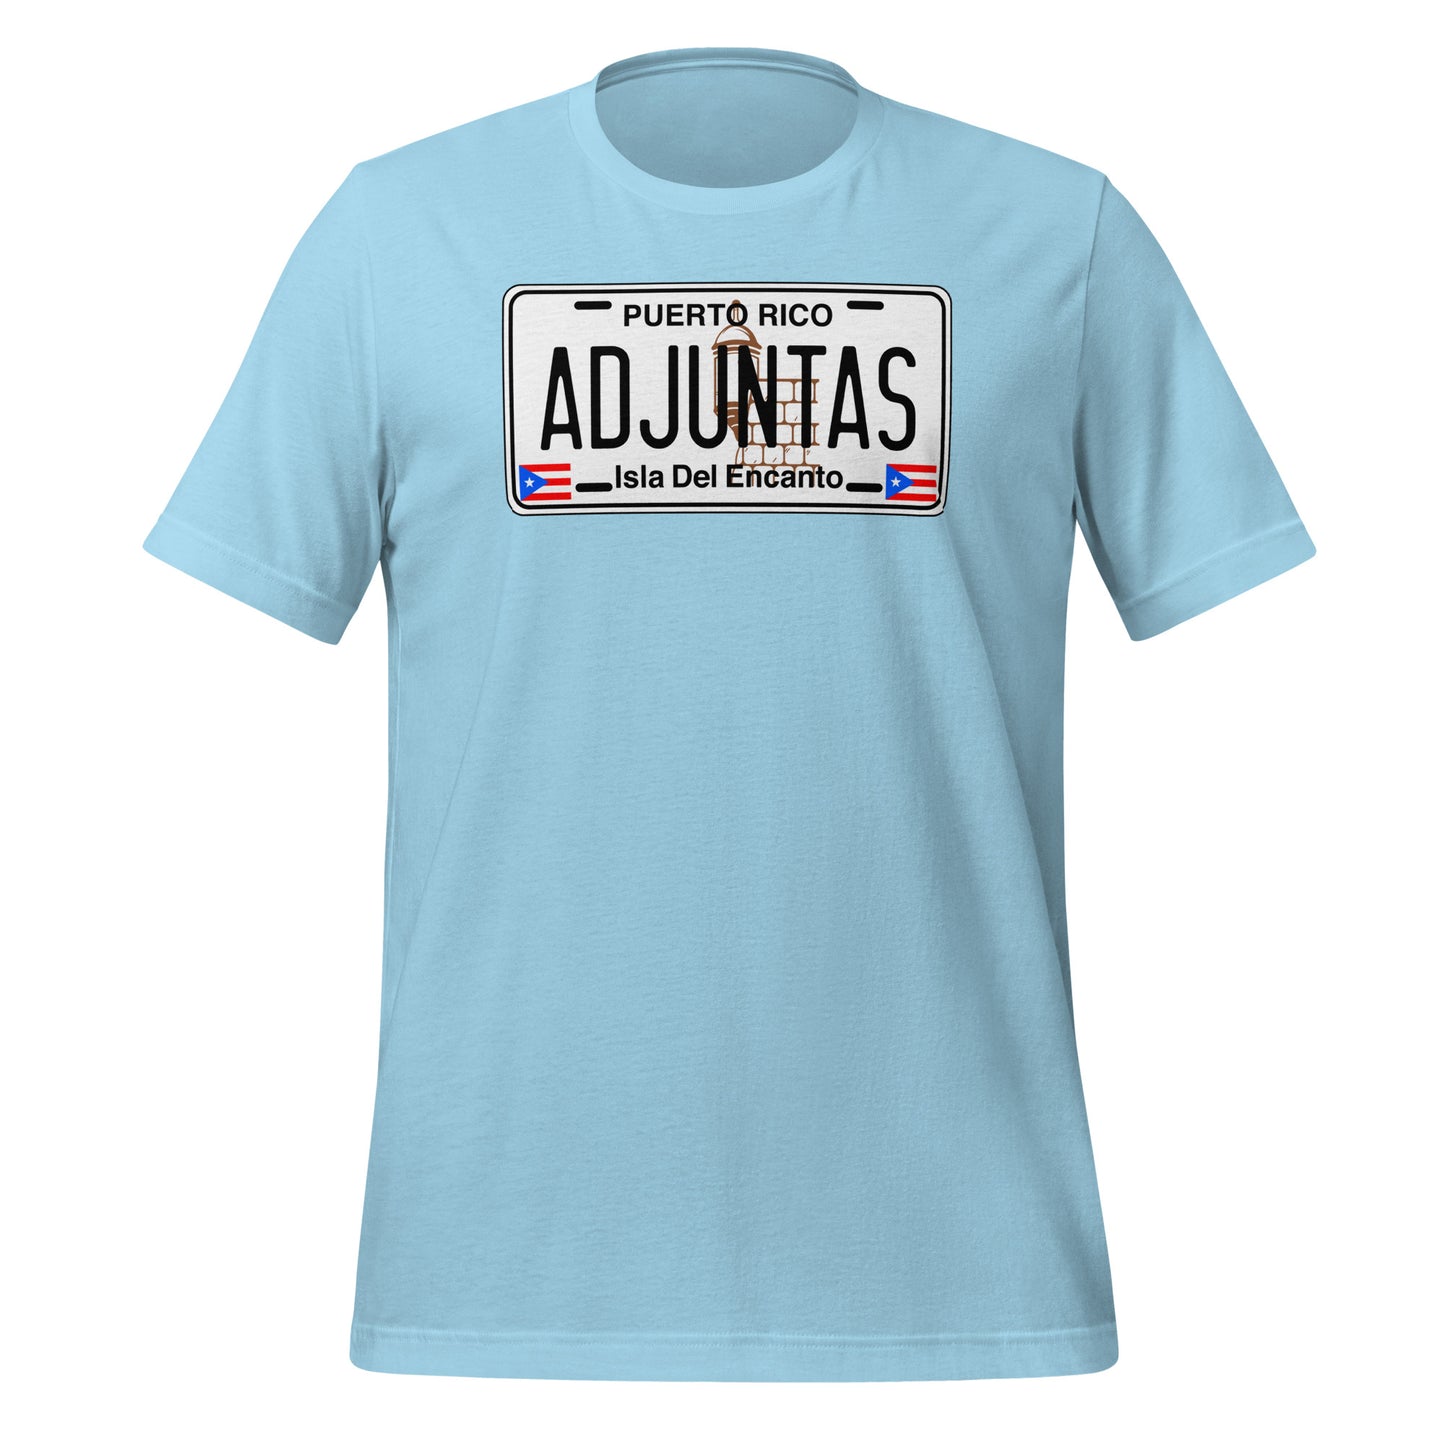 Adjuntas Puerto Rico License Plate Unisex T-Shirt